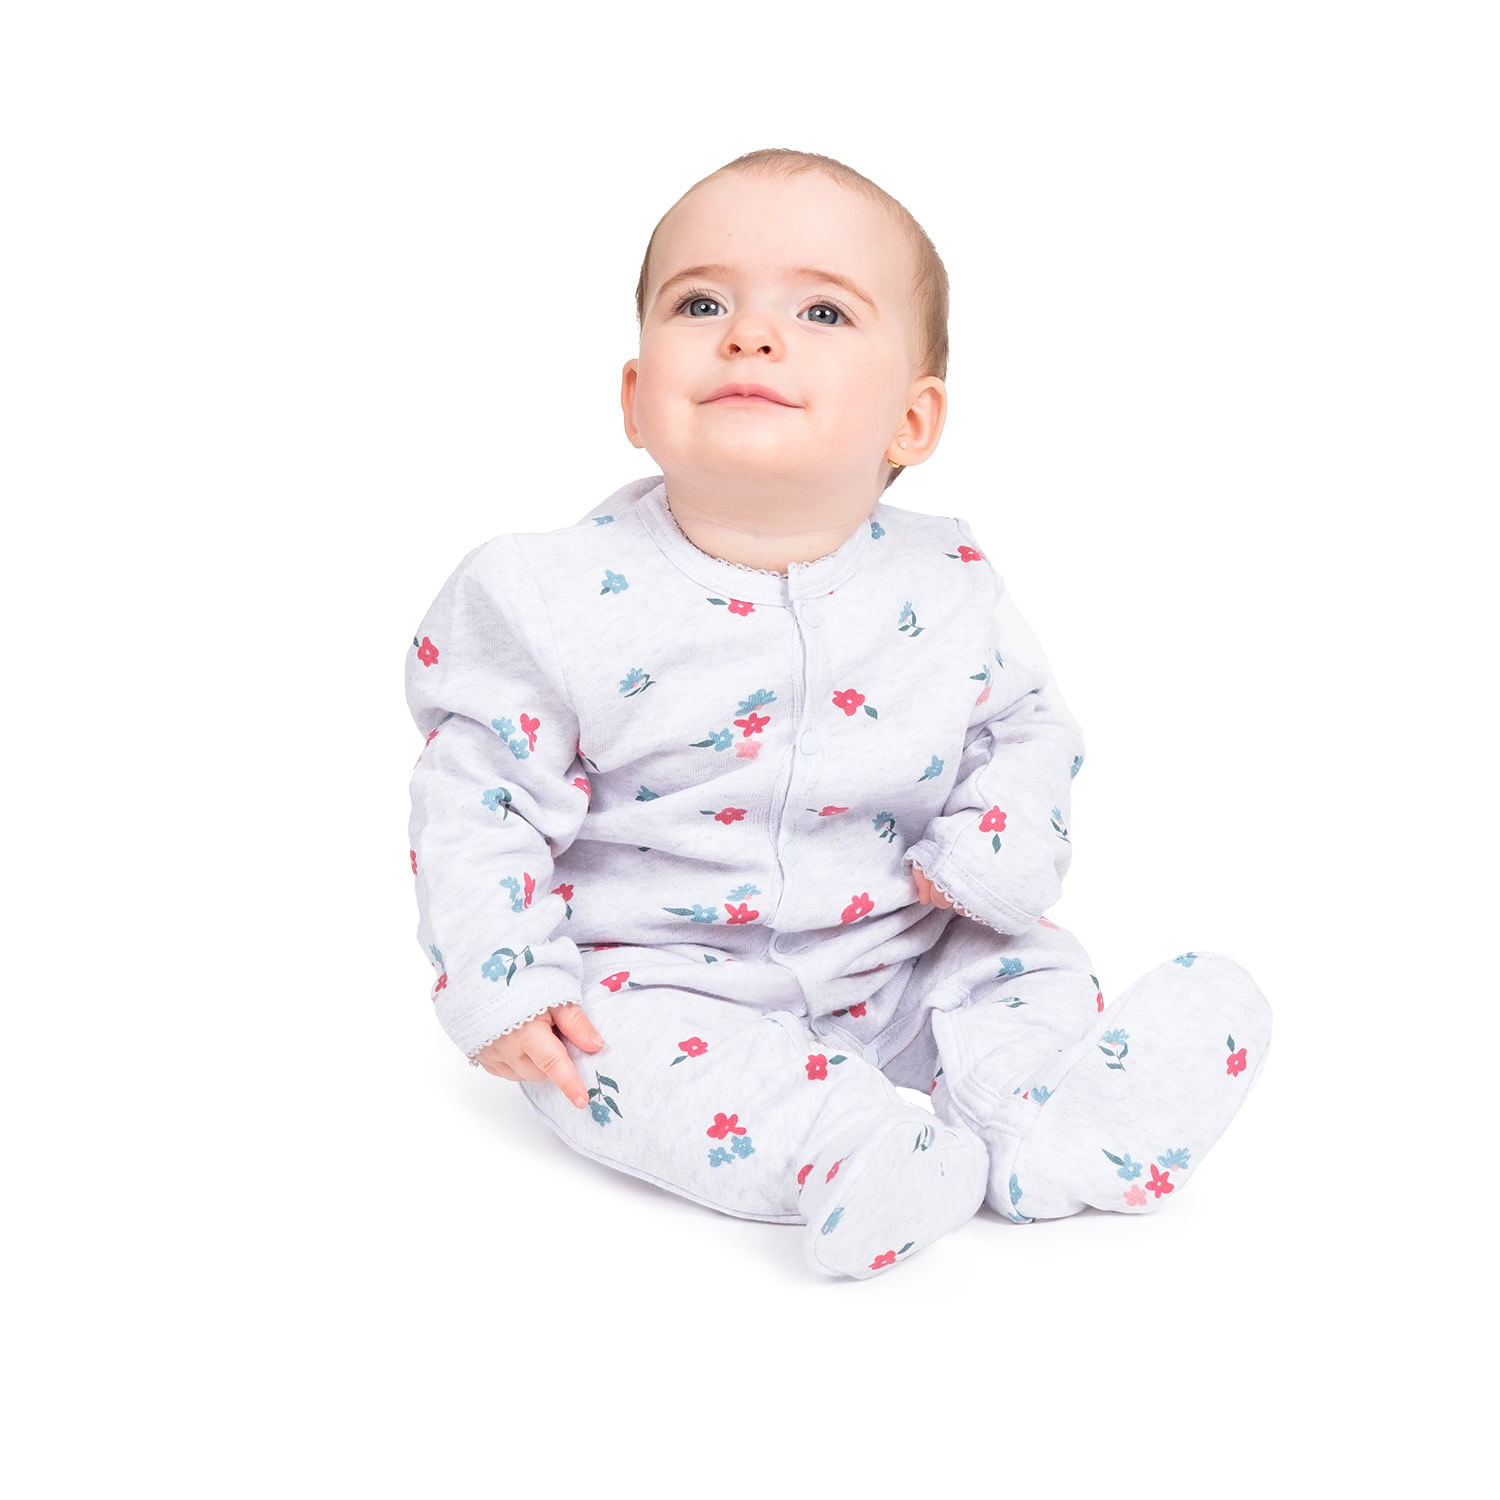 Meta title-pijama bebe nina seta 211102146